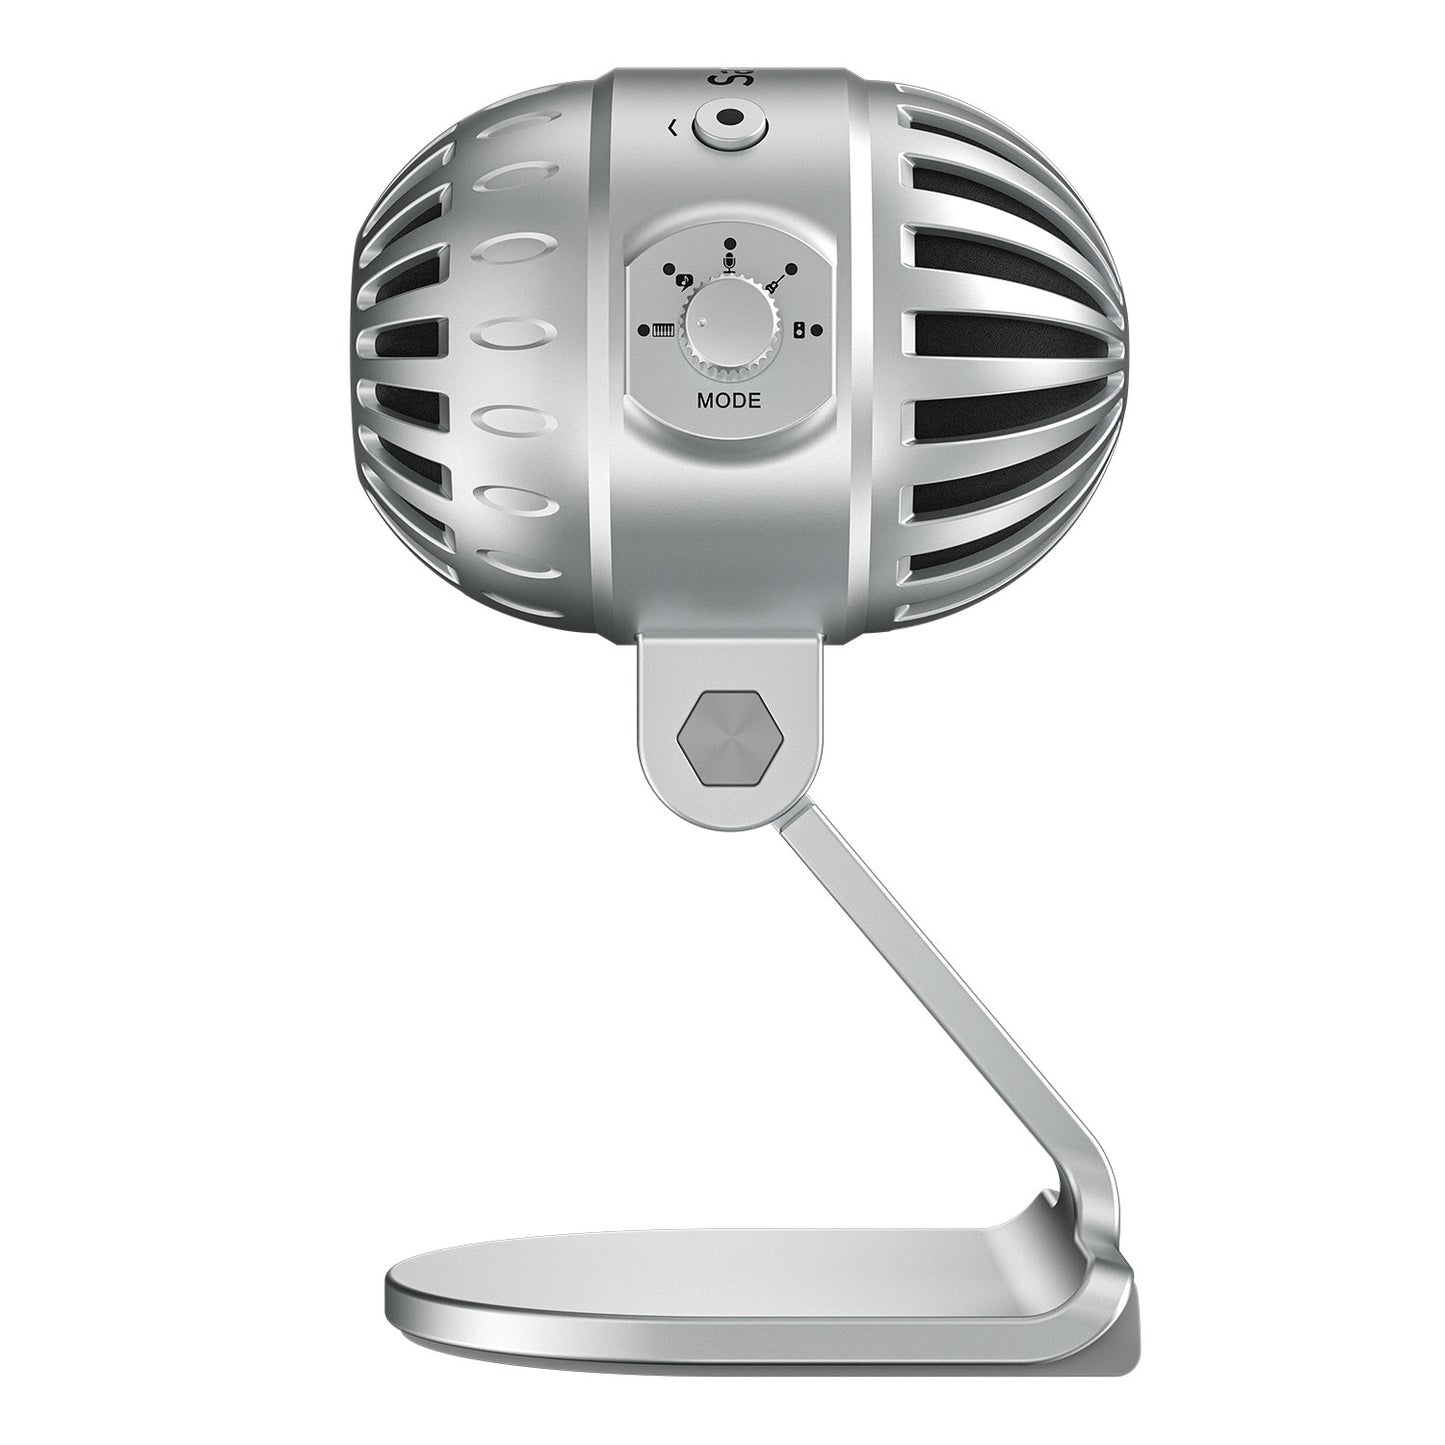 Saramonic MTV550 Professional Wired Desktop Microphone